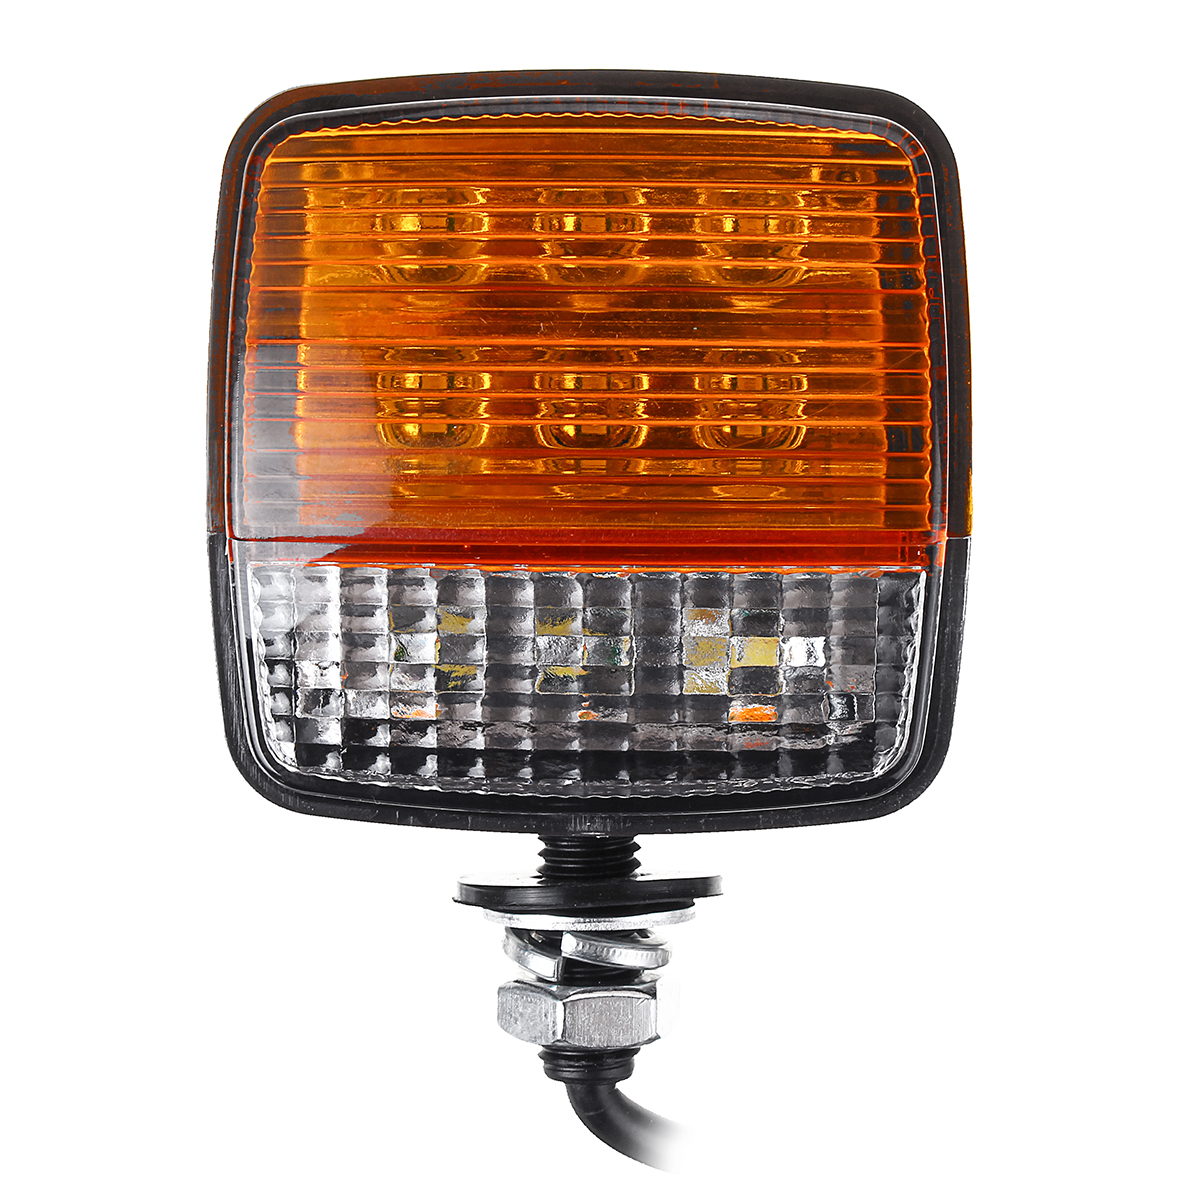 12V-80V Doppelseitige wasserdichte LED-Rücklichter Blinkerlampe für Anhänger, LKW, Boot, Yacht, Auto, Motorrad